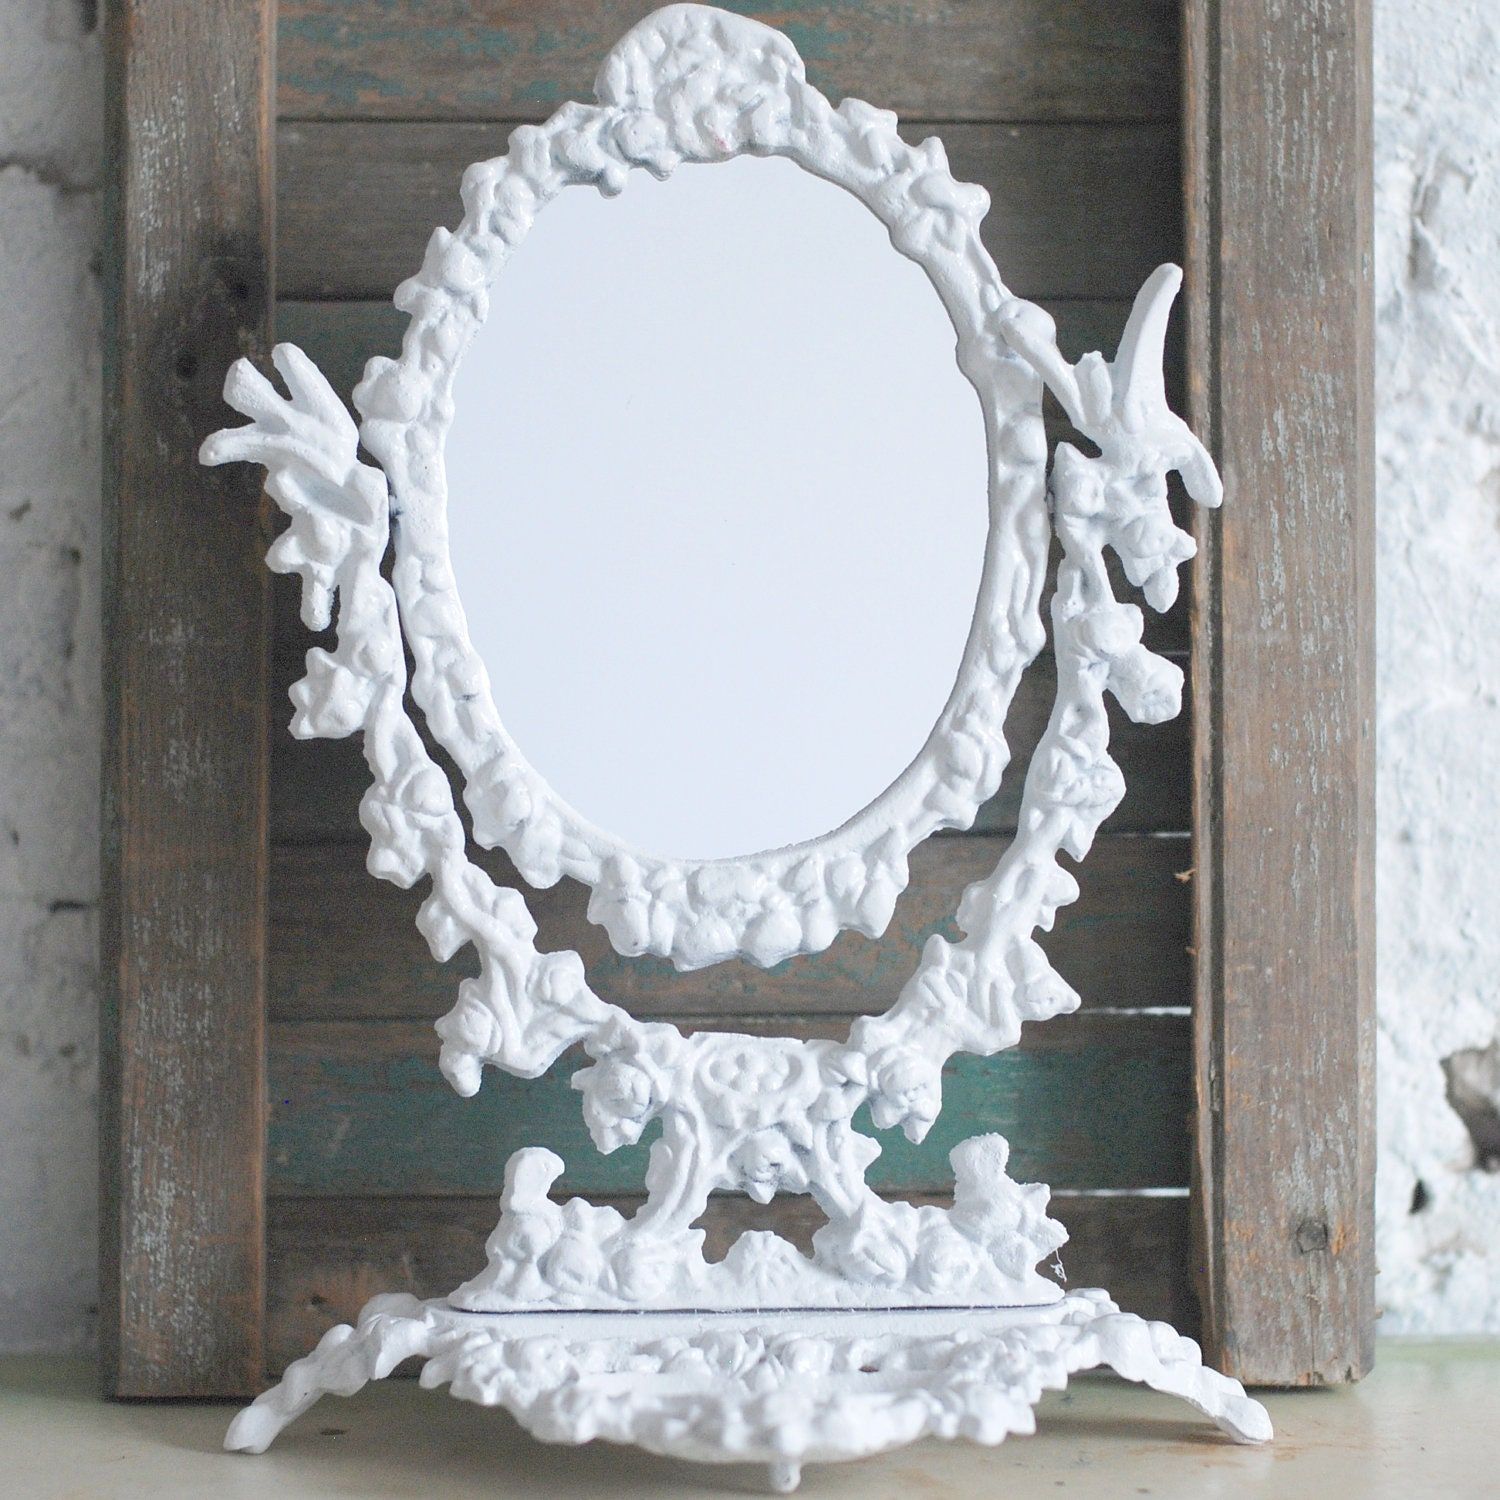 Antique Ornate Metal Pedestal Mirror / Stand Alone Frame Regarding Antique Brass Standing Mirrors (View 2 of 15)